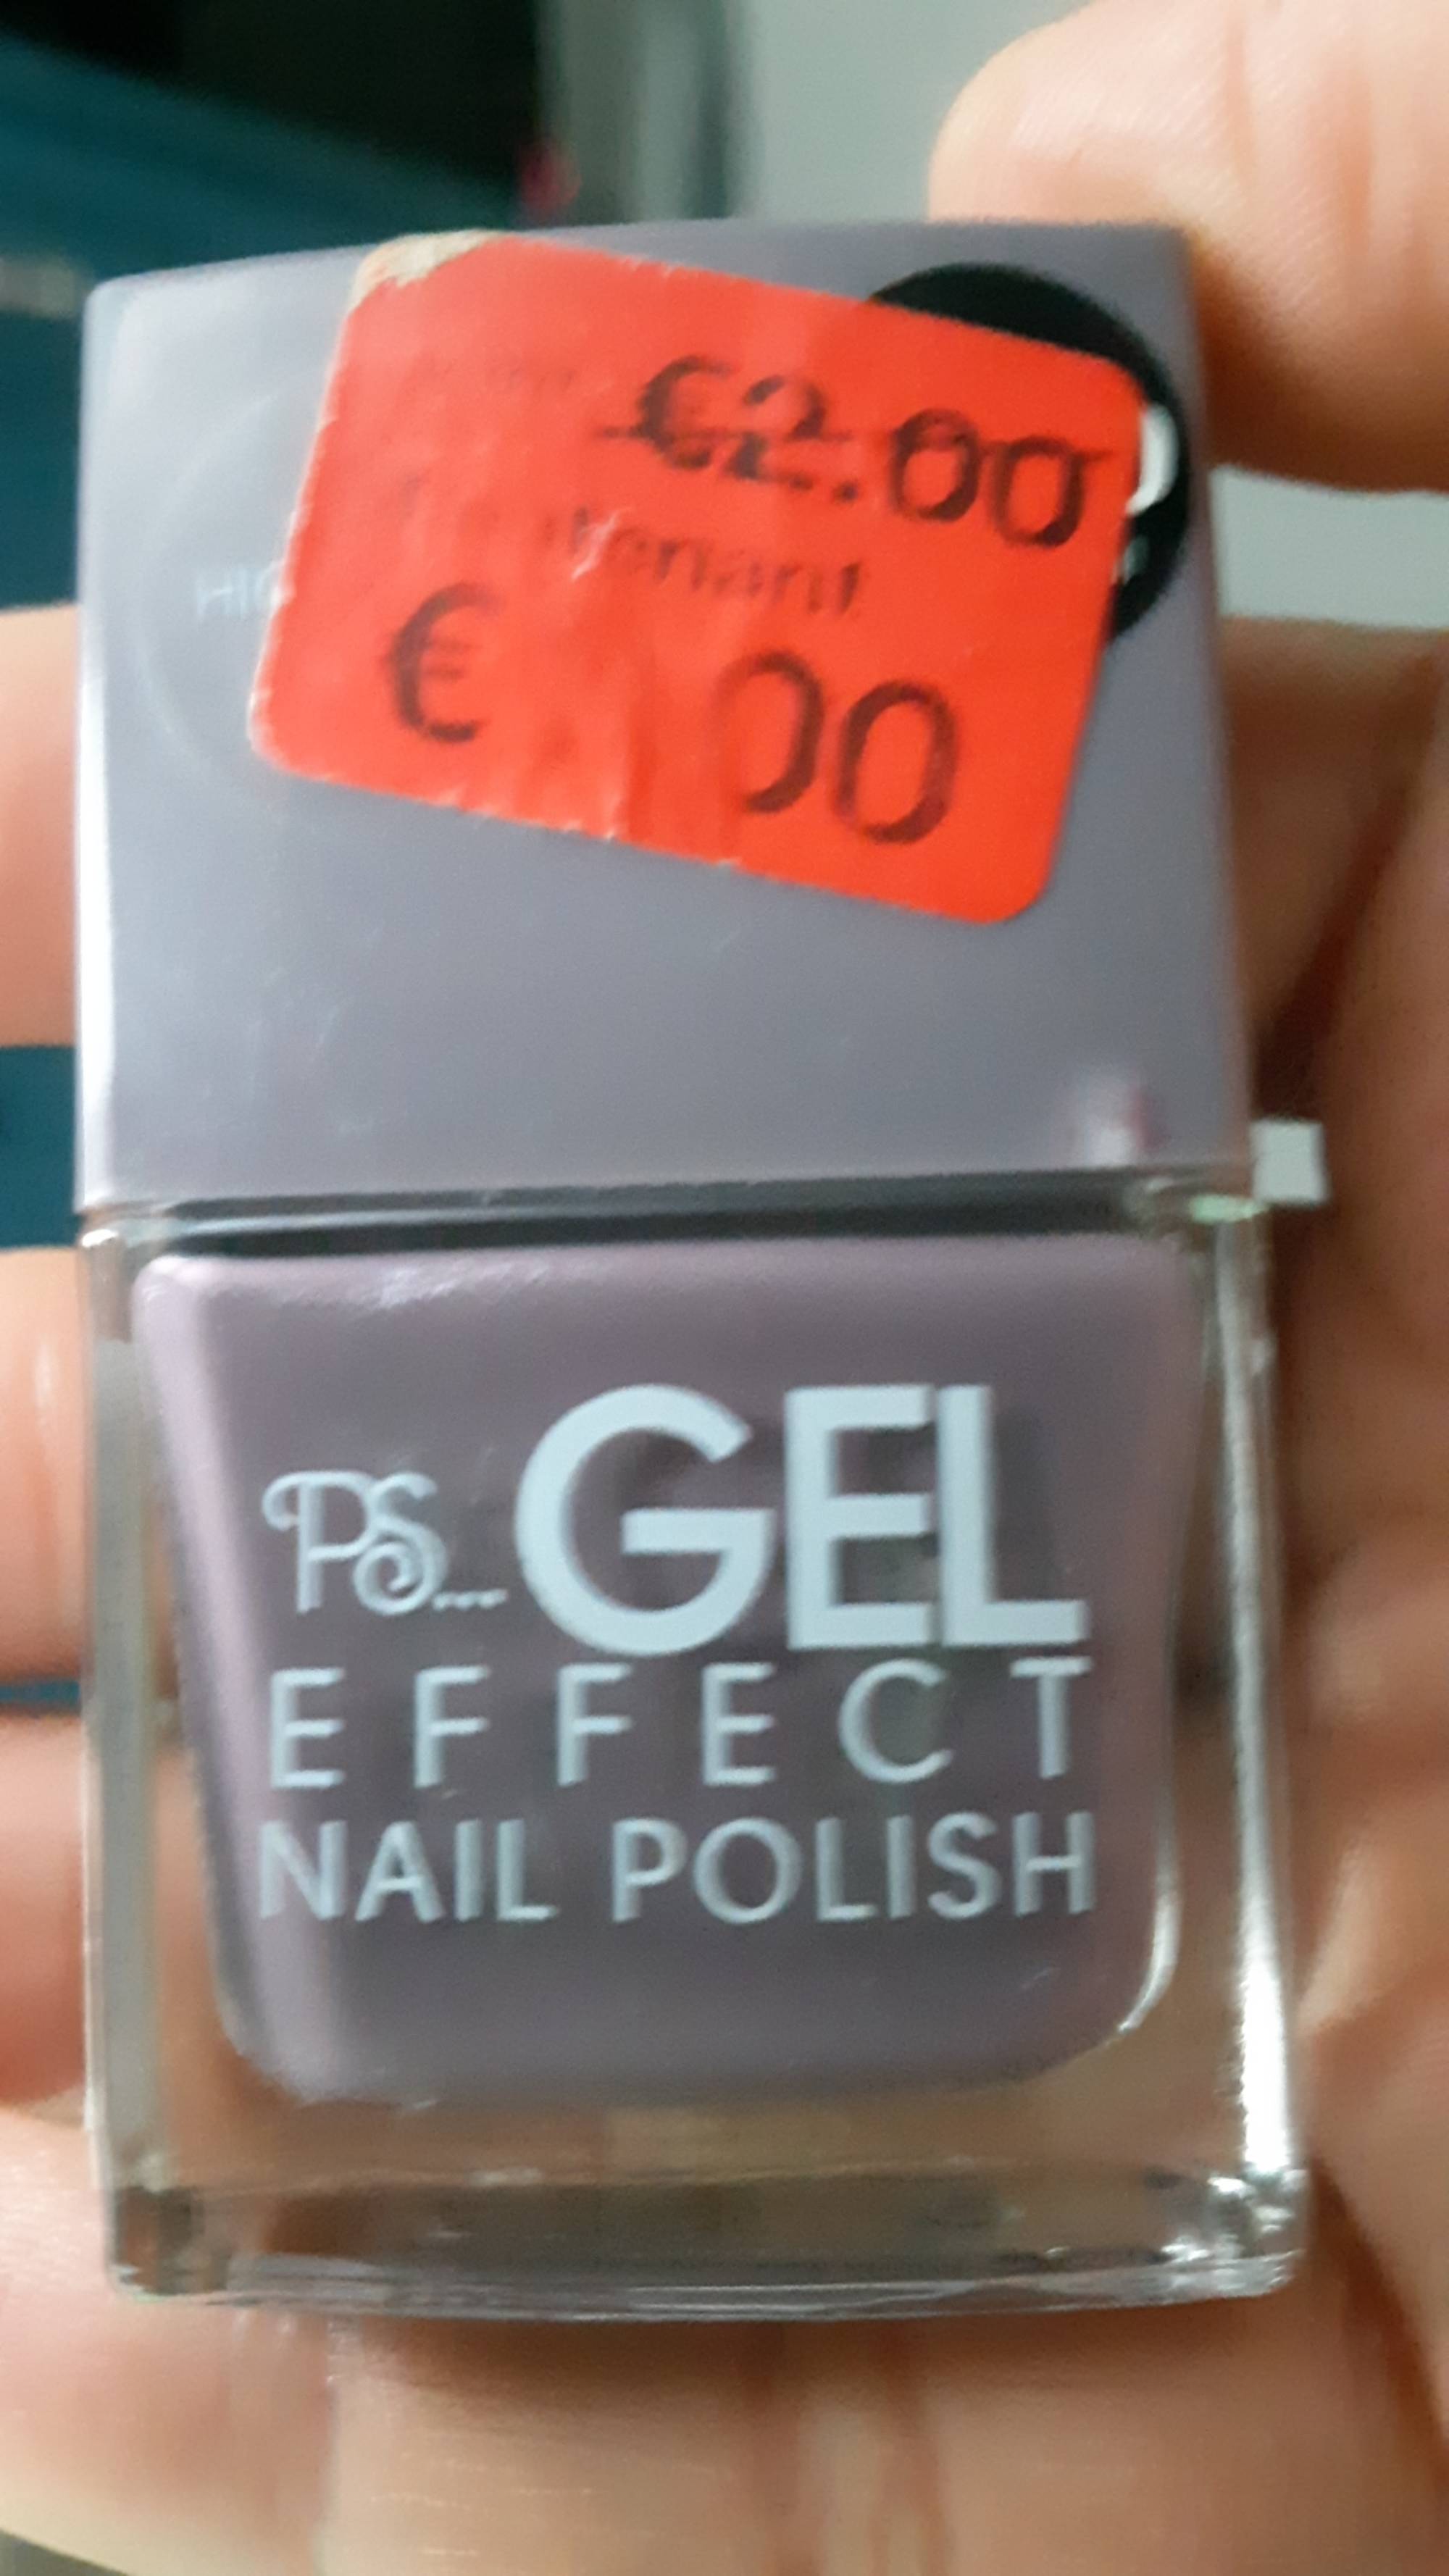 PRIMARK - PS... - Gel effect nail polish